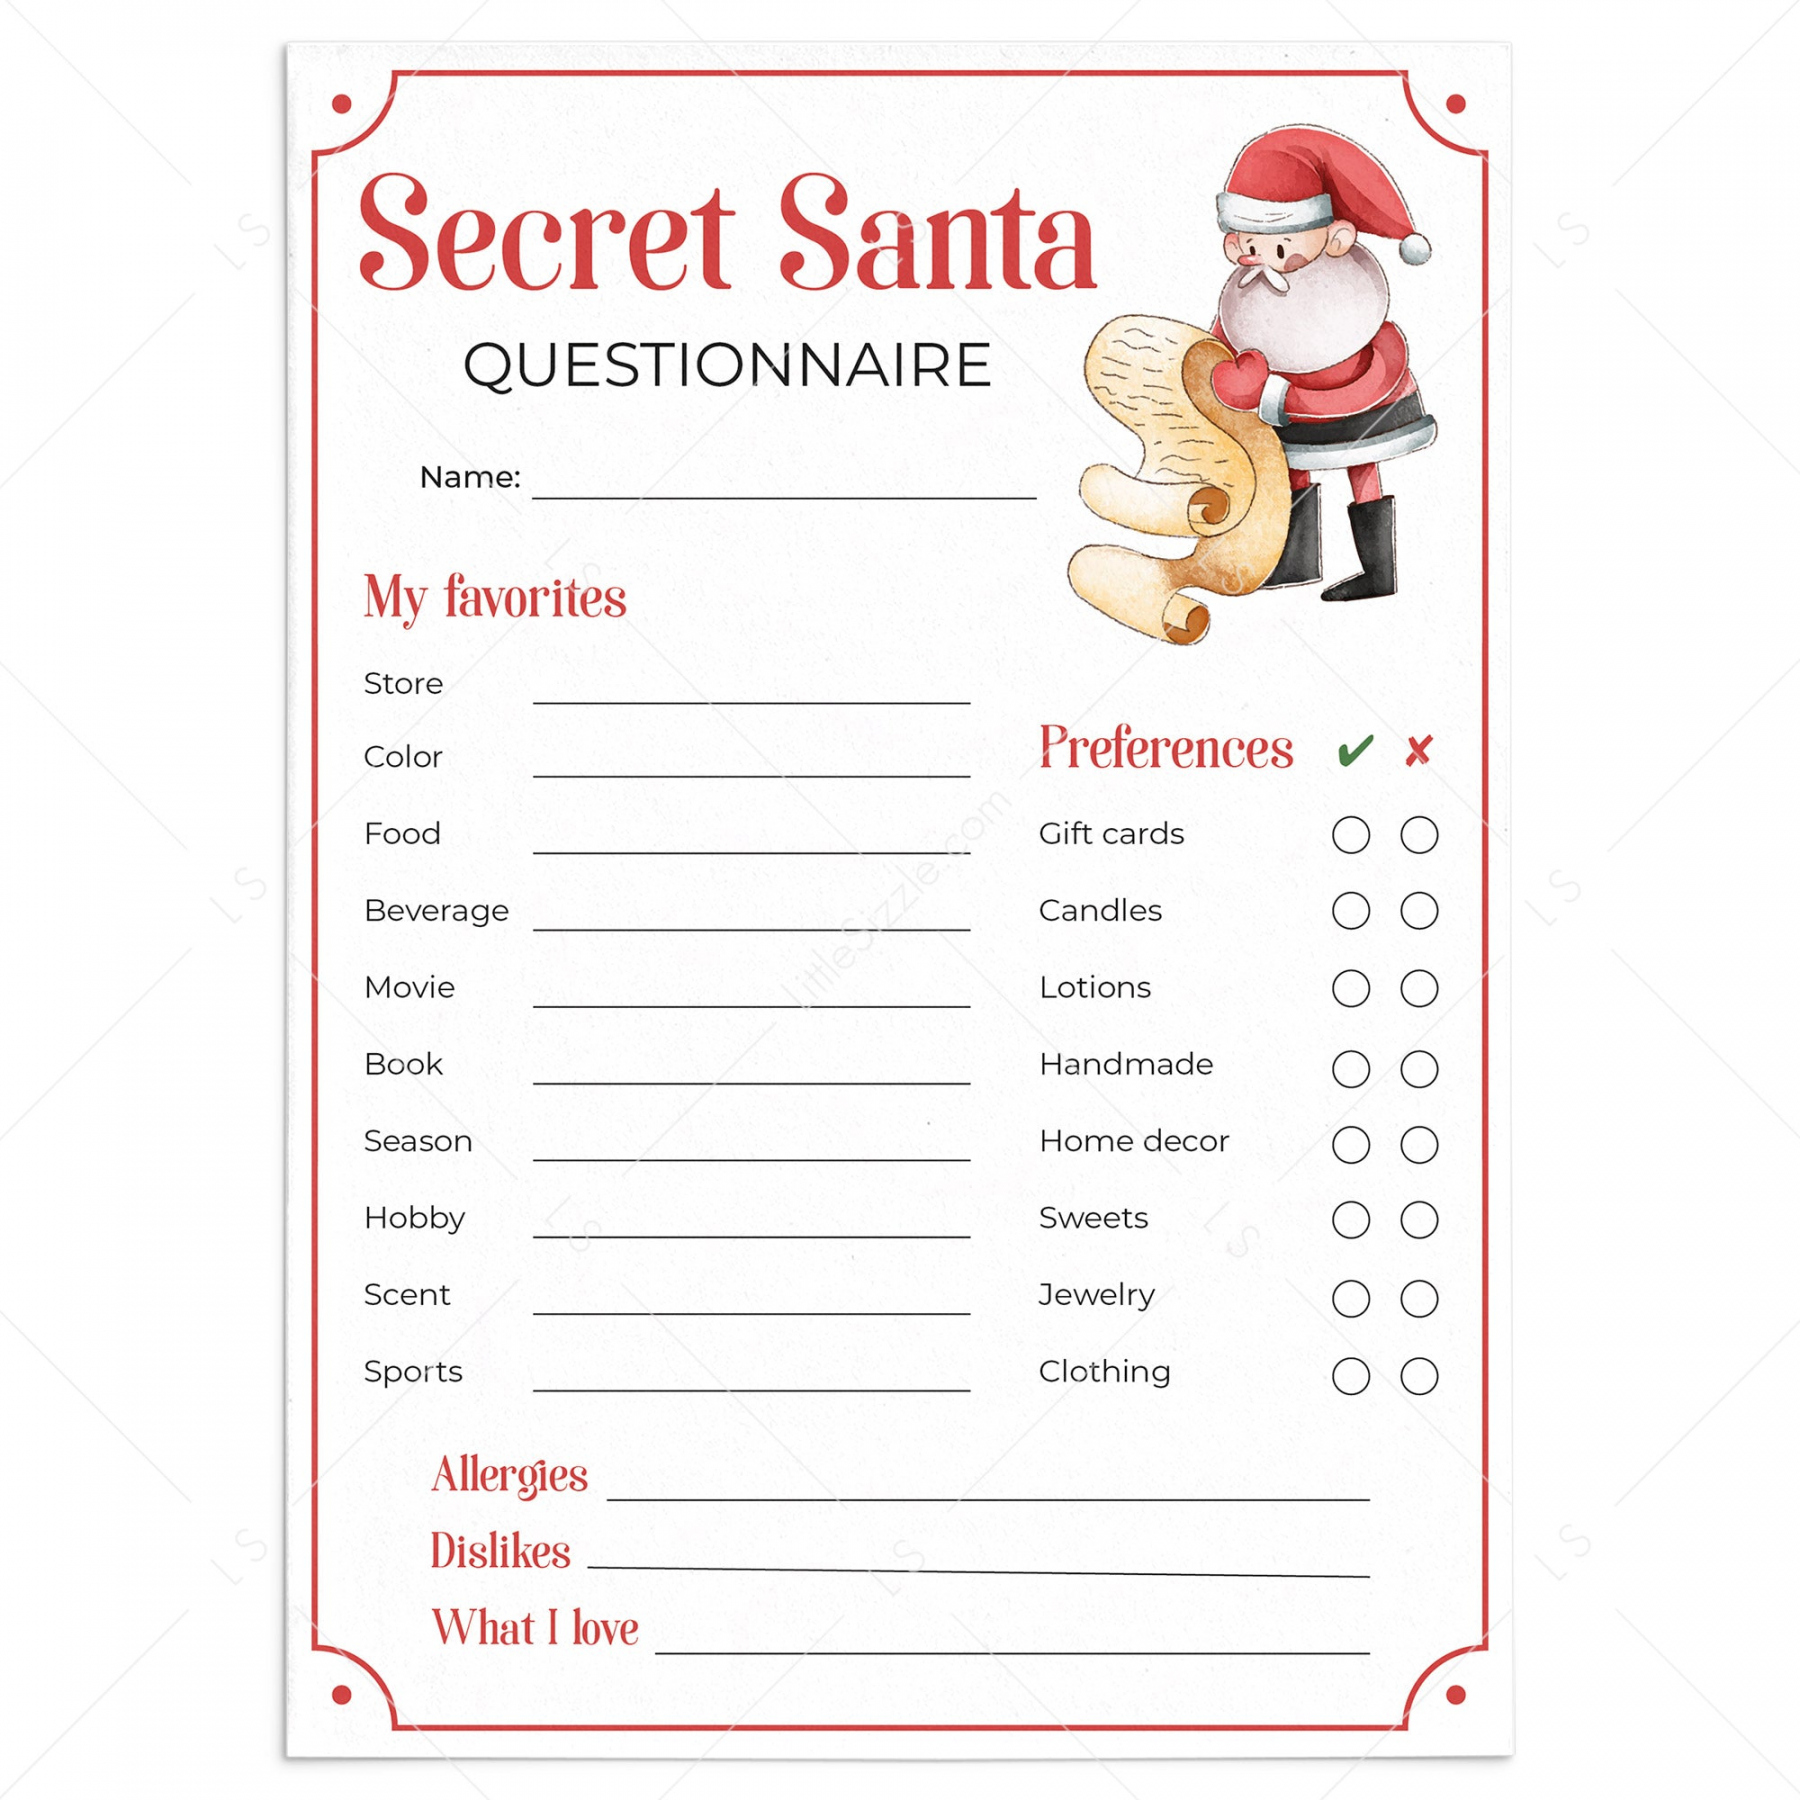 Free Printable Secret Santa Template - Printable - Secret Santa Questionnaire for Gift Exchange Printable